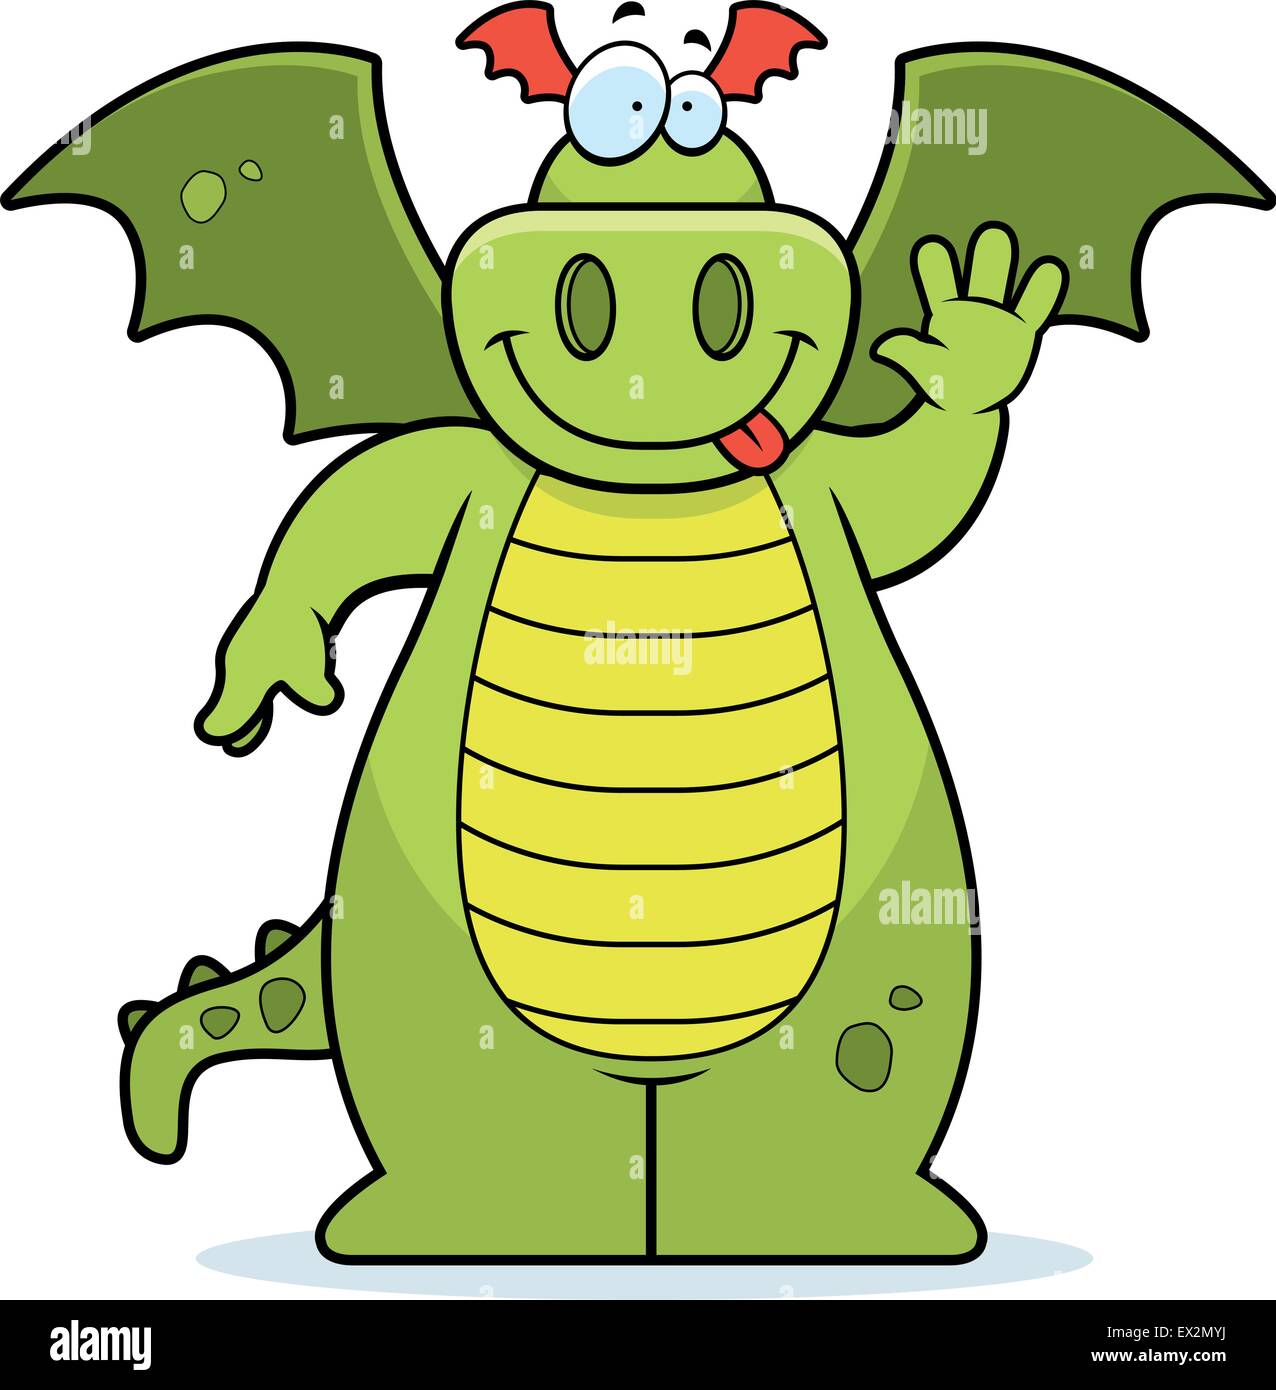 A happy cartoon dragon waving and smiling. Stock Vector